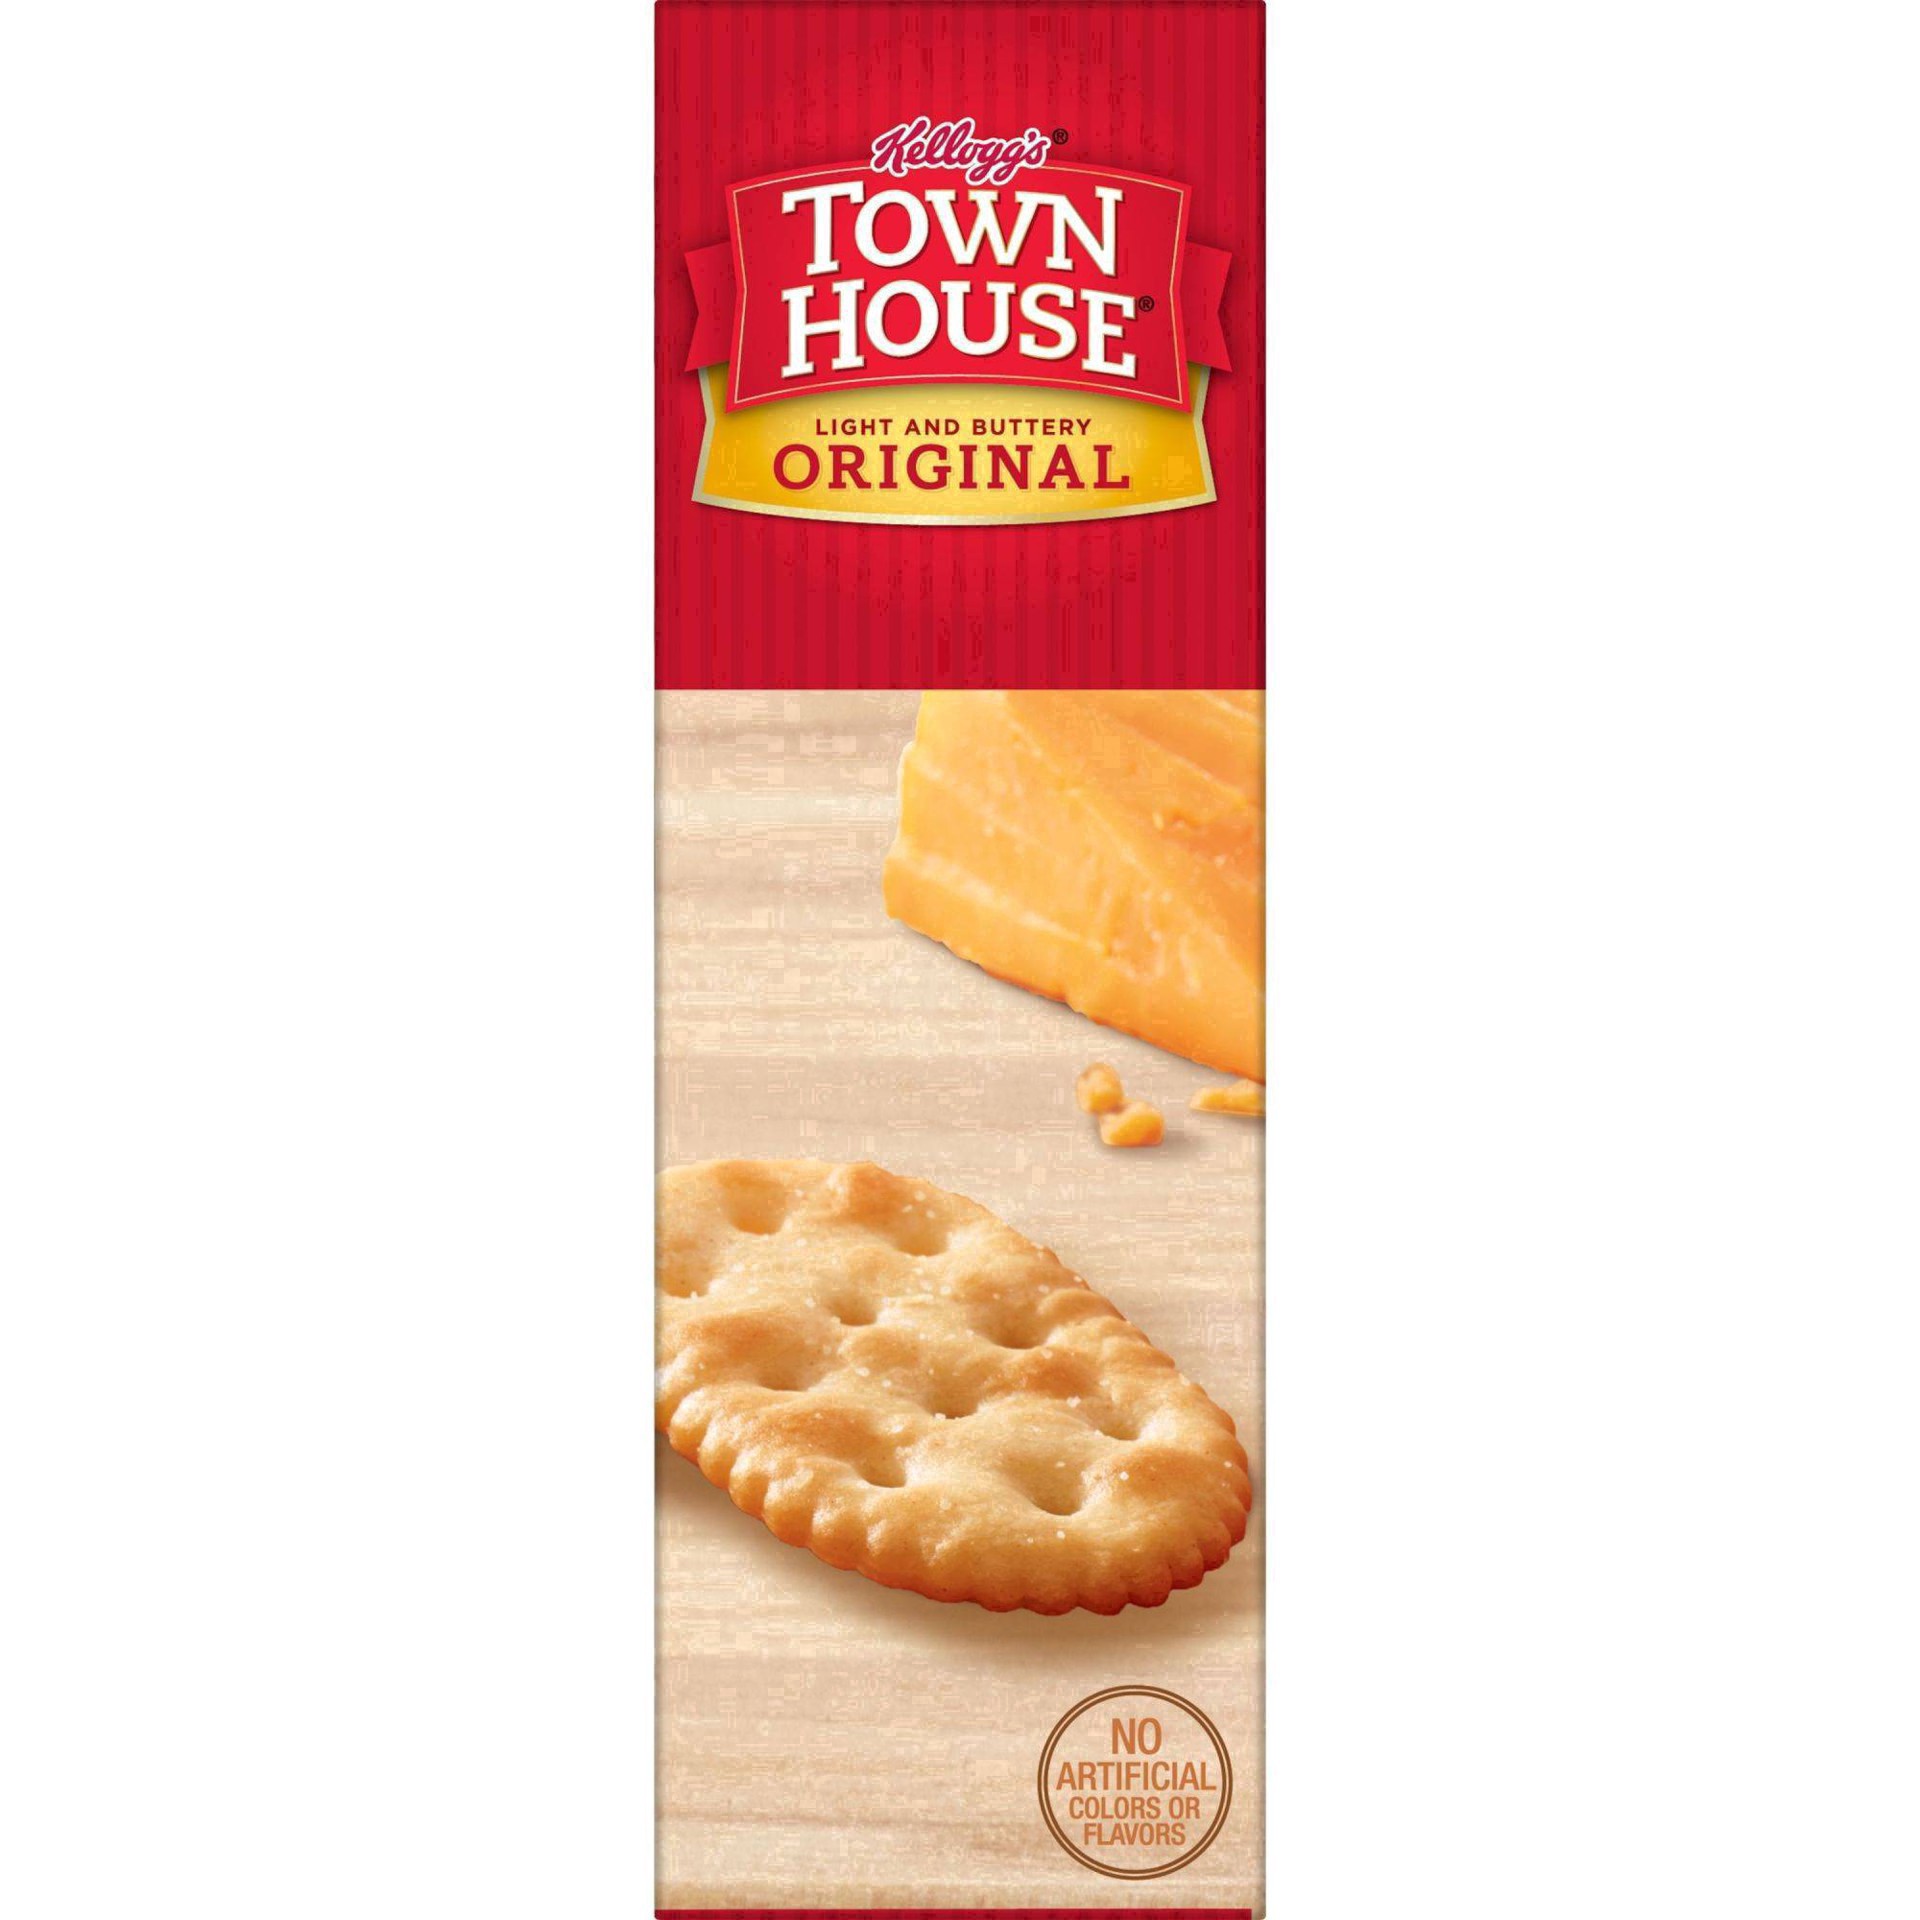 slide 66 of 101, Town House Kellogg's Town House Original Snack Crackers - 13.8oz, 13.8 oz